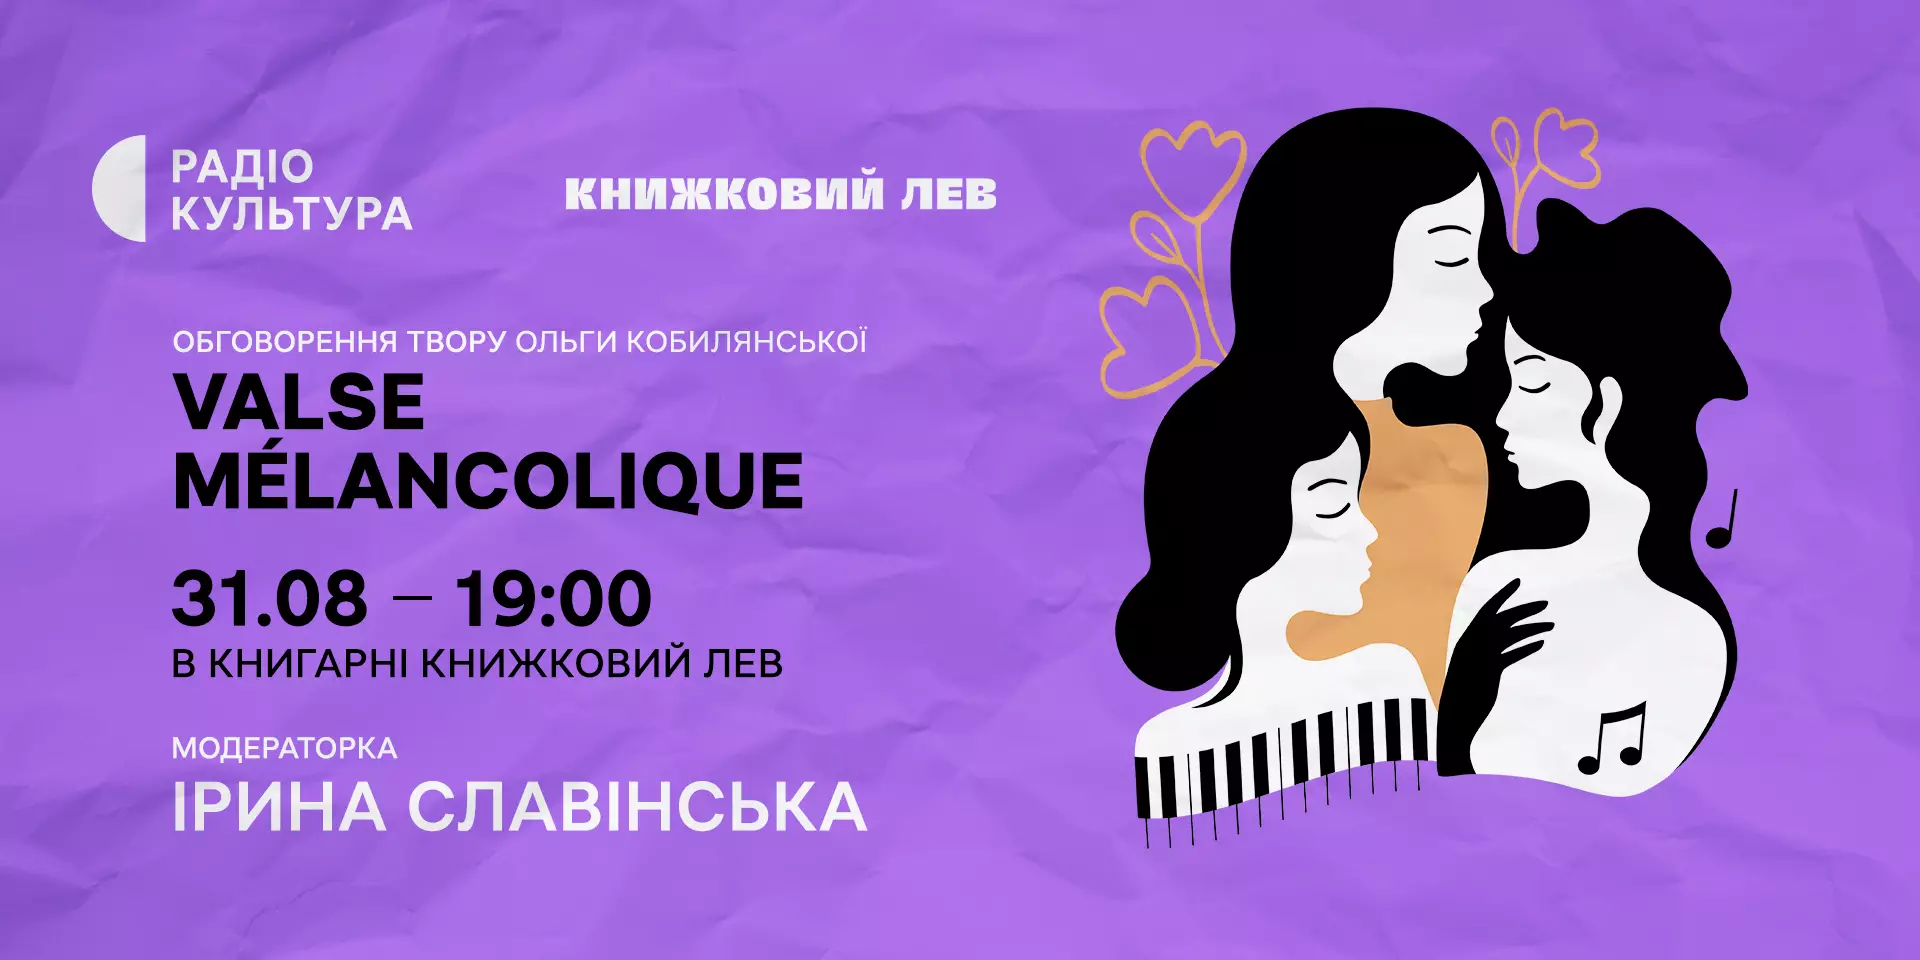 У книжковому клубі радіо «Культура» говоритимуть про «Valse mélancolique» Ольги Кобилянської